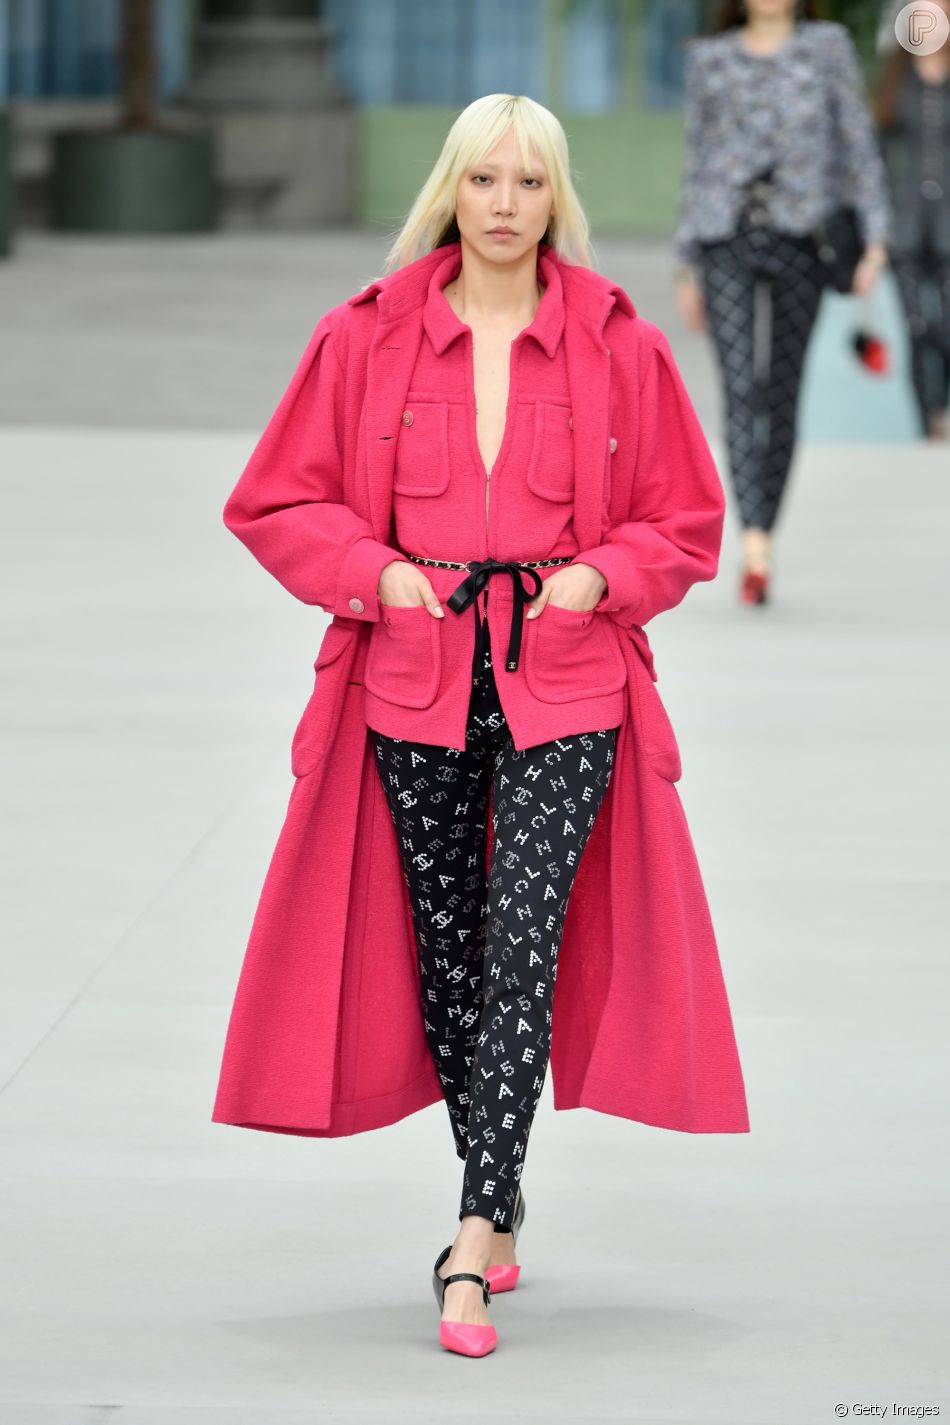 Chanel Cruise 2020: Casaco e trench coat pink, legging com monograma e sapato bicolor combinado com as peças mais vibrantes